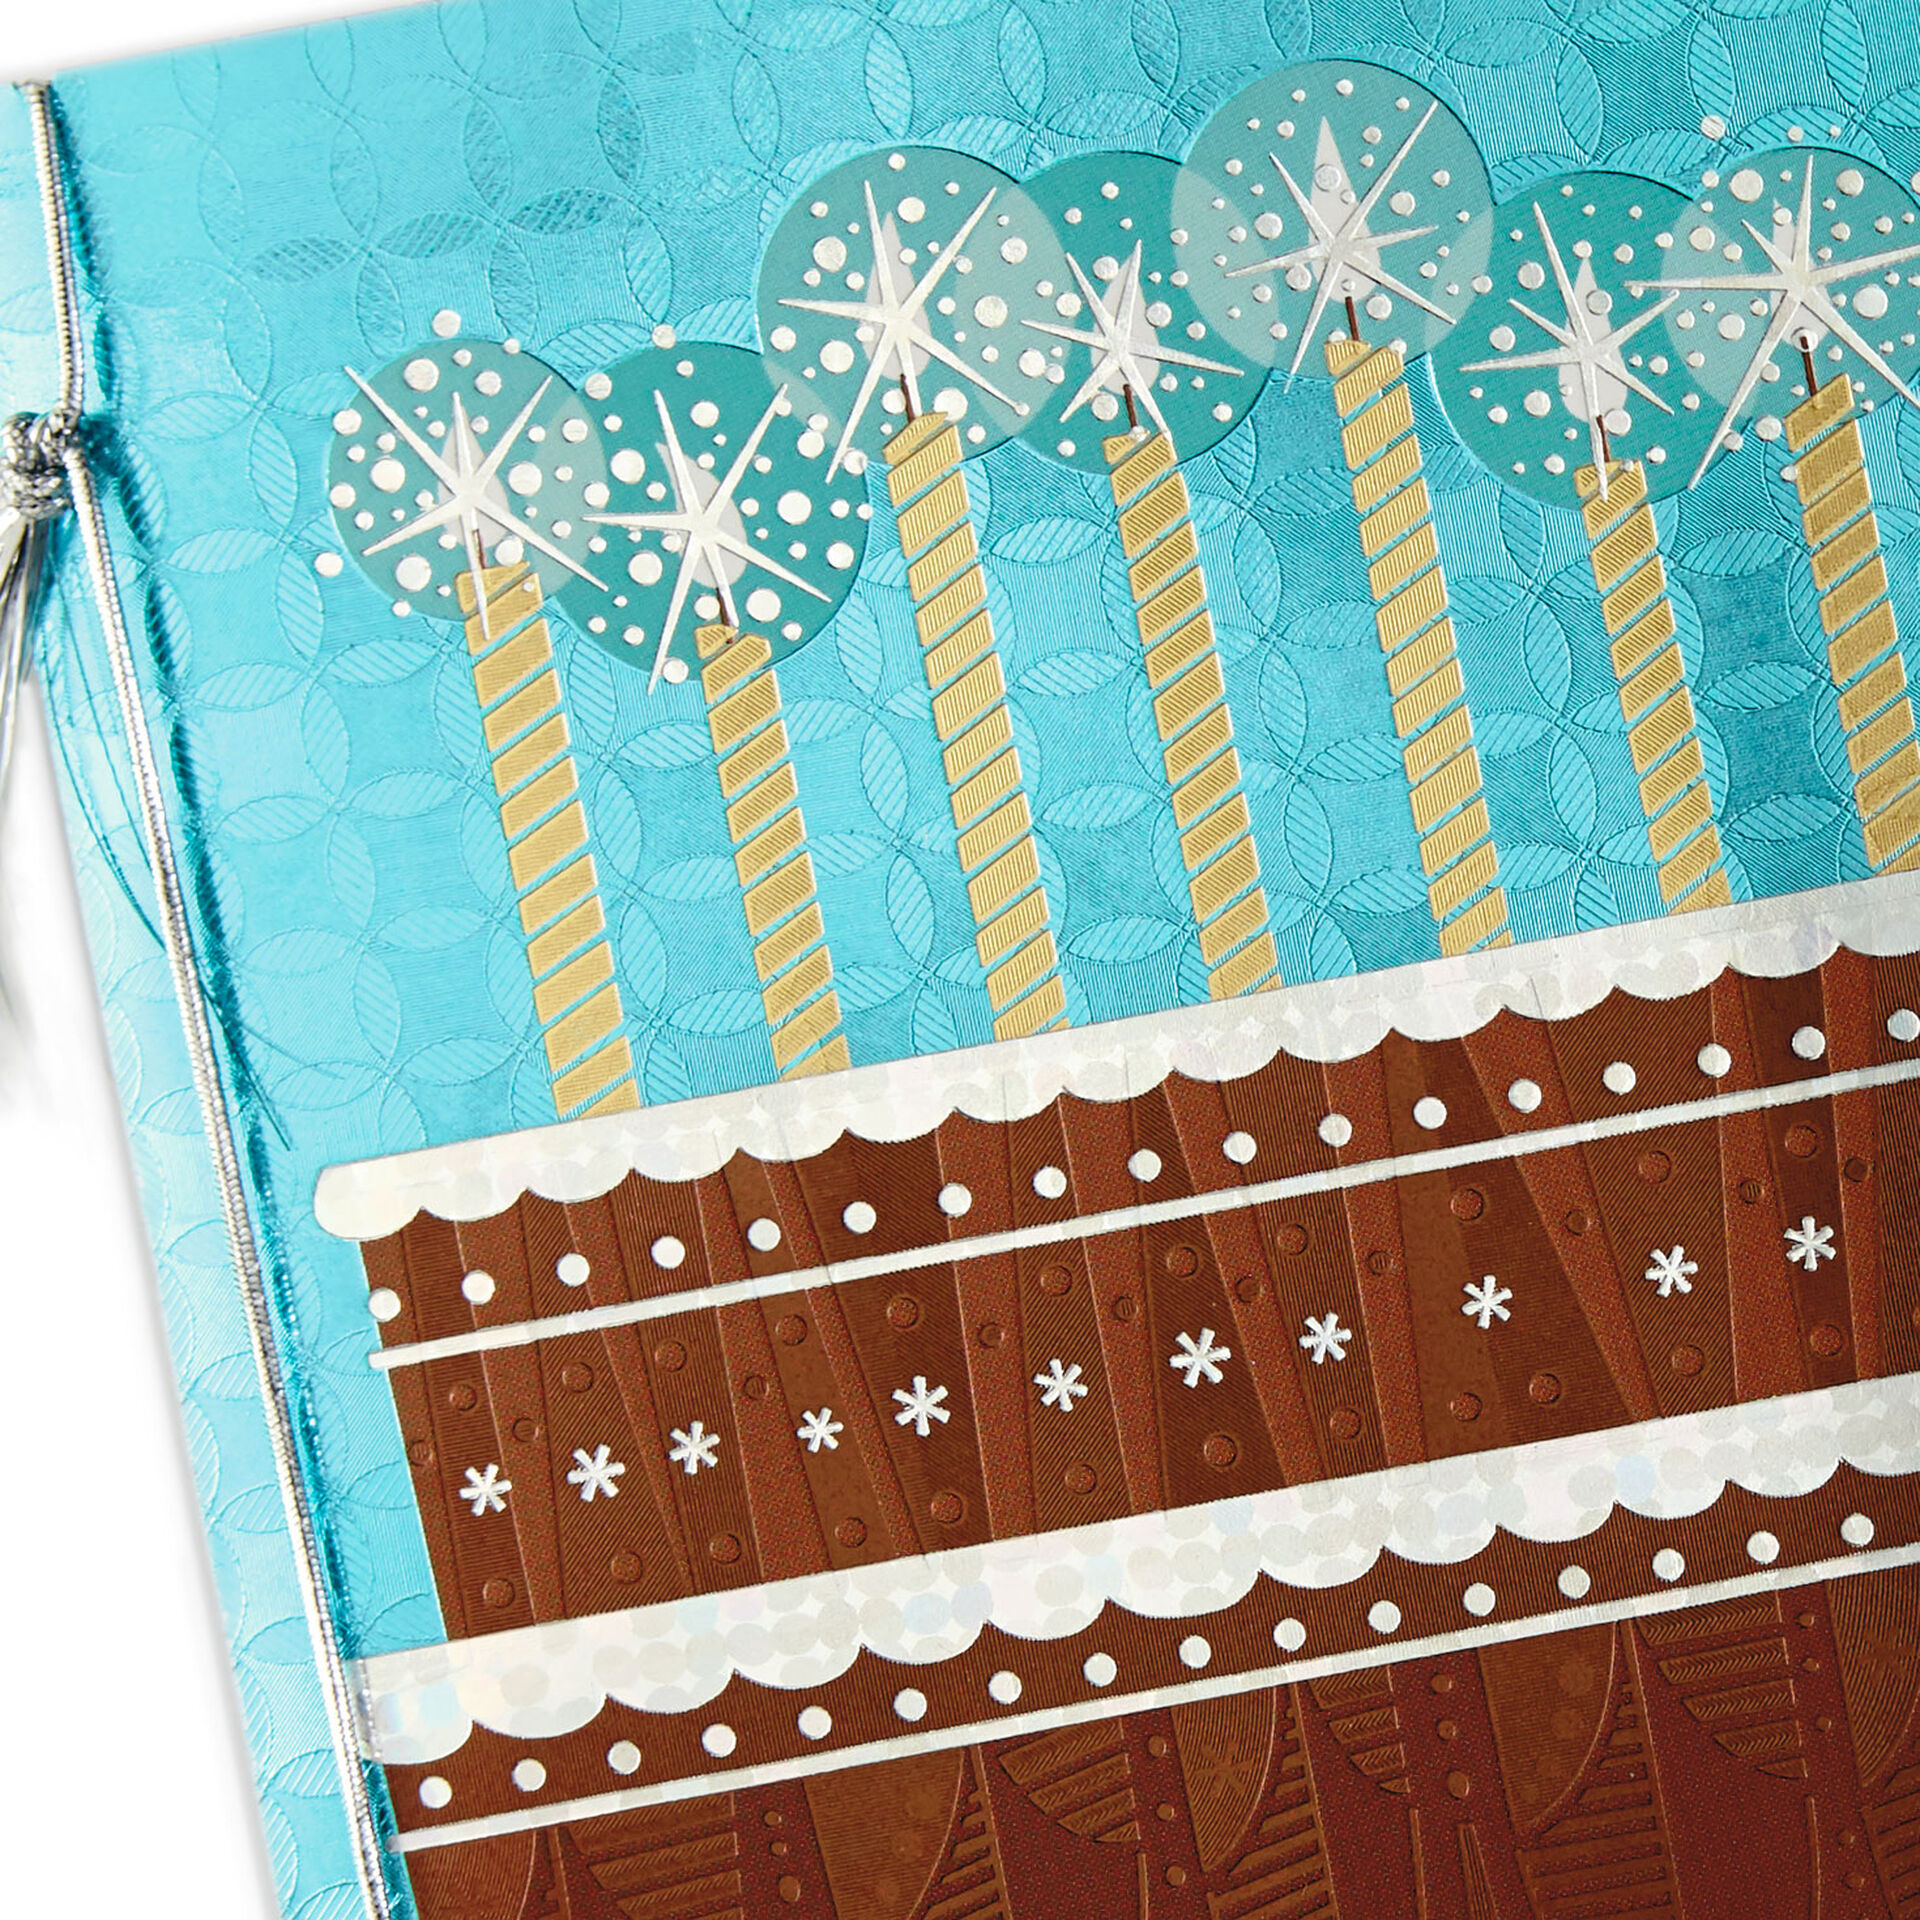 Double Chocolate Cake Birthday Card - Greeting Cards - Hallmark